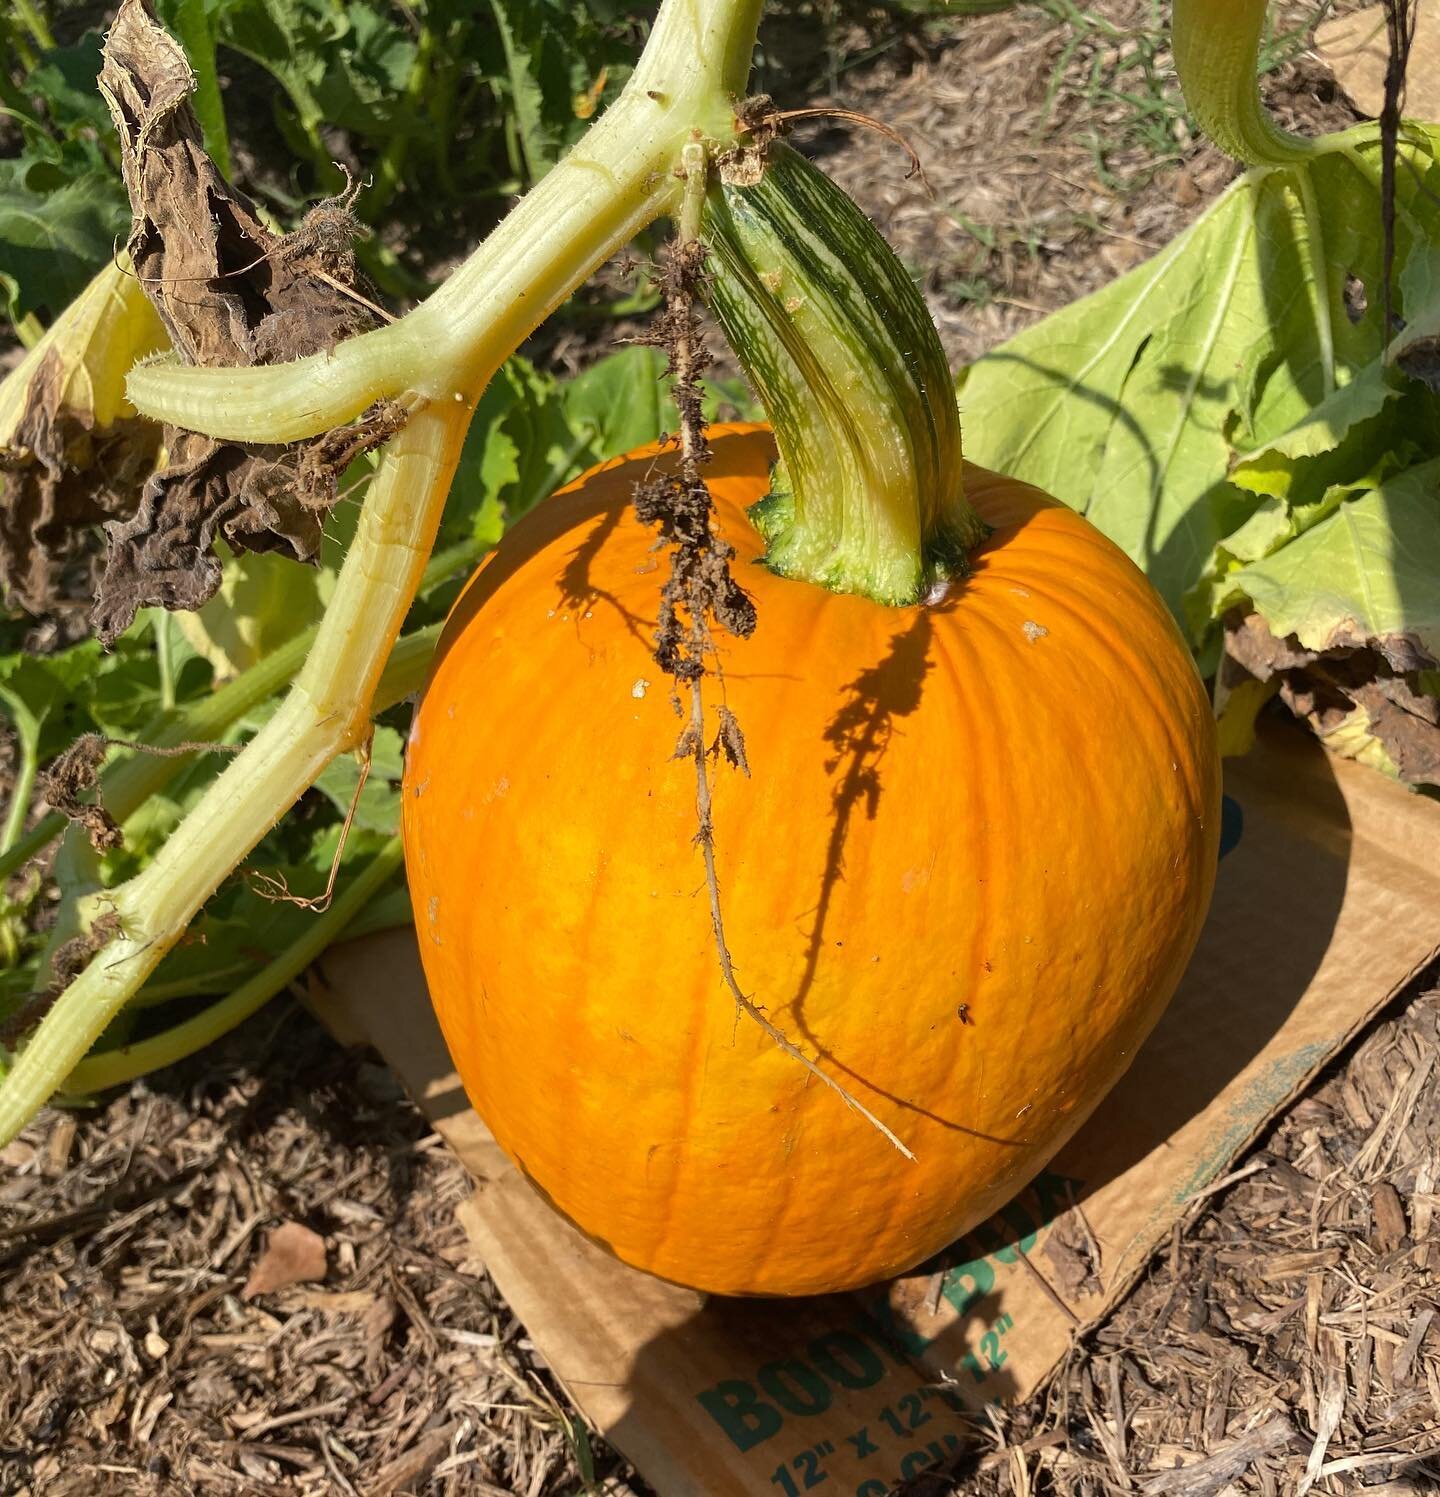 The pumpkins are almost ready to be picked! Tag your pumpkin picking partner in the comments below! 🎃
&bull;
&bull;
#jacksboropumpkinpatch #pumpkinpatch #pumpkinHarvest #seasonalfarming #pumpkineverything #ilovefall #falldecor #PumpkinPicking #pumpk